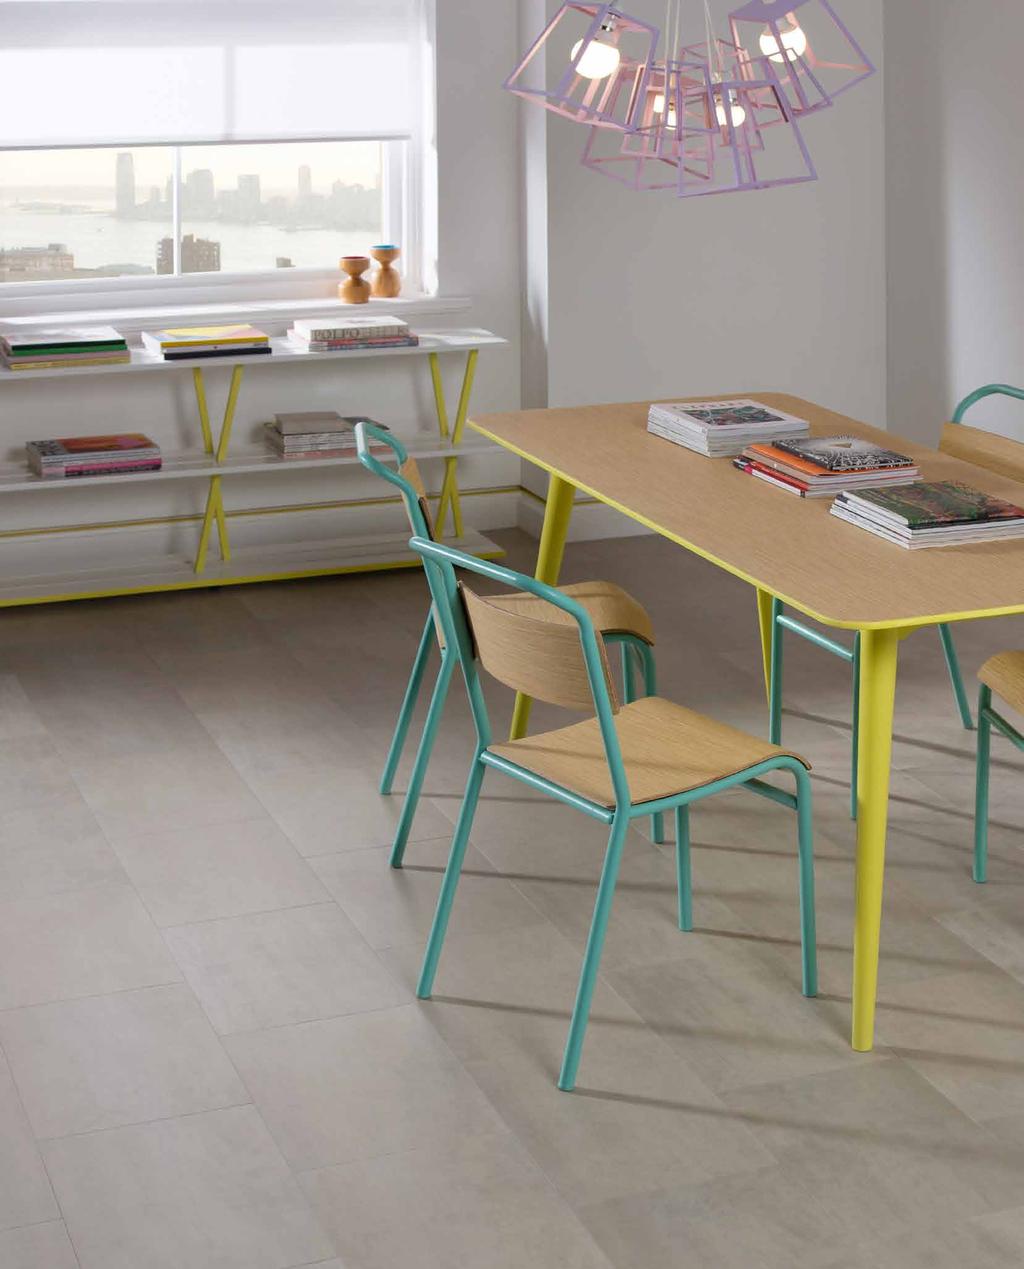 PLATINUM With the look of ceramic flooring, this pale grey design offers a simple elegant